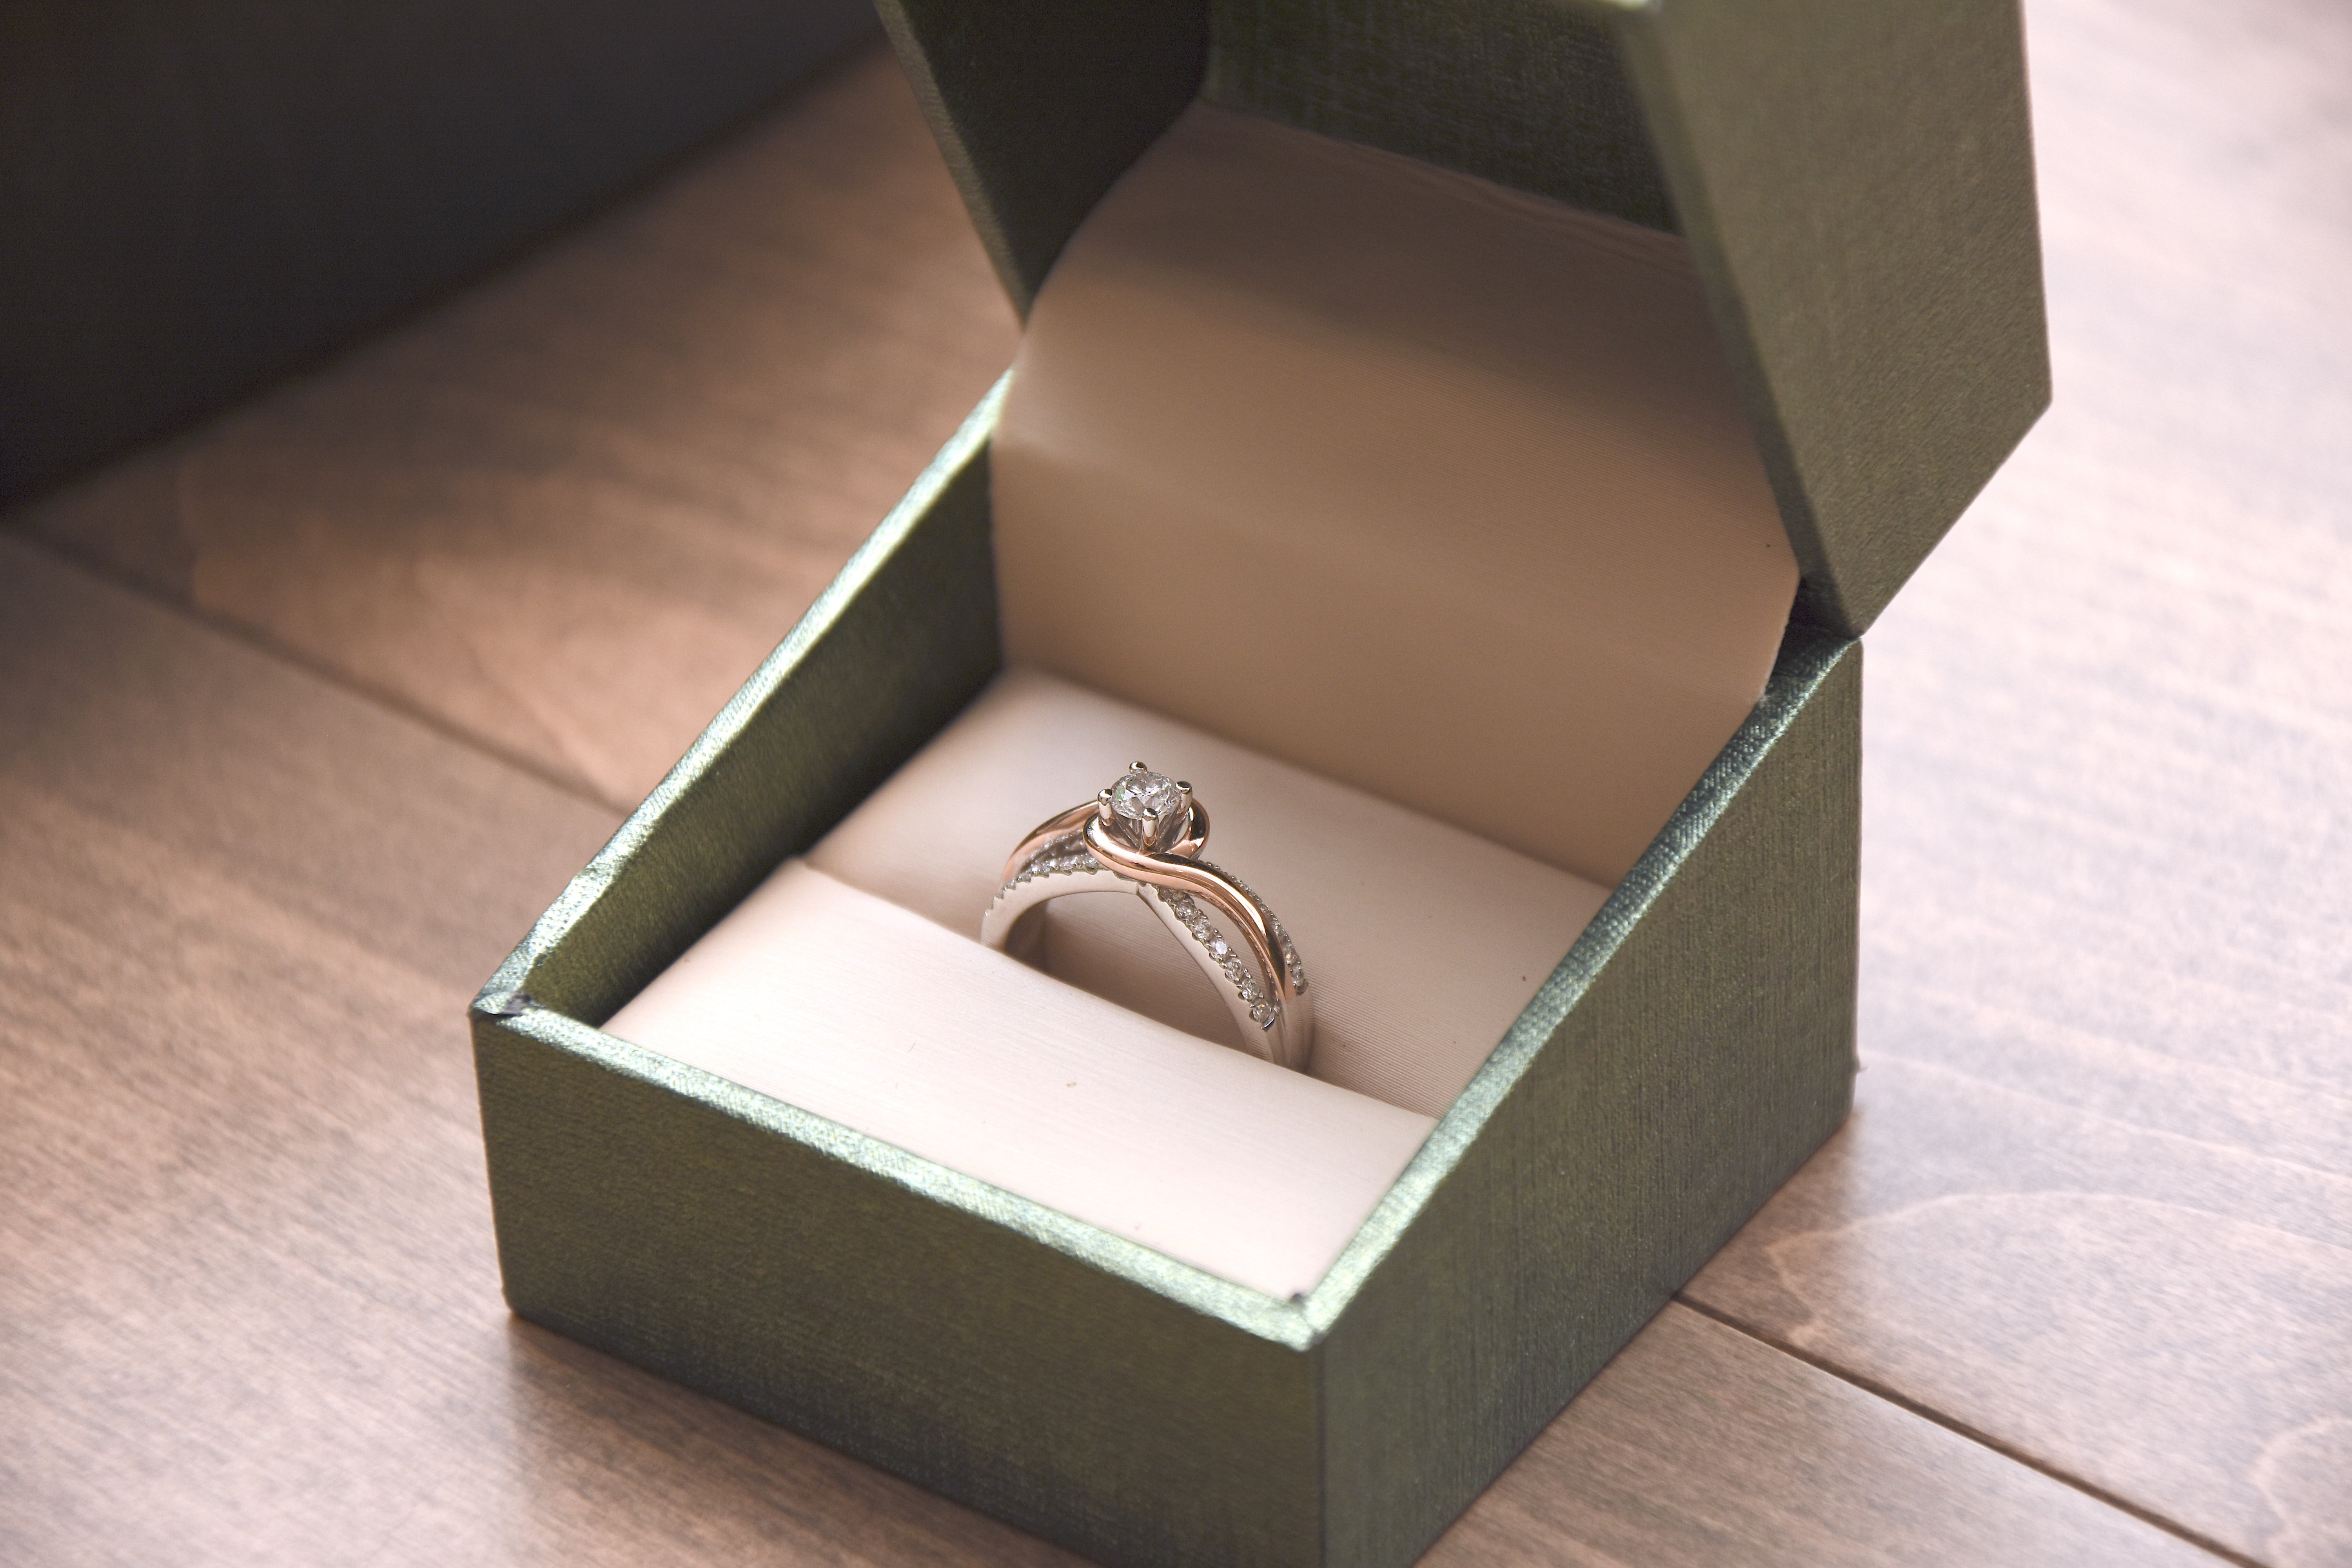 A wedding ring inside it box. | Source: Unsplash